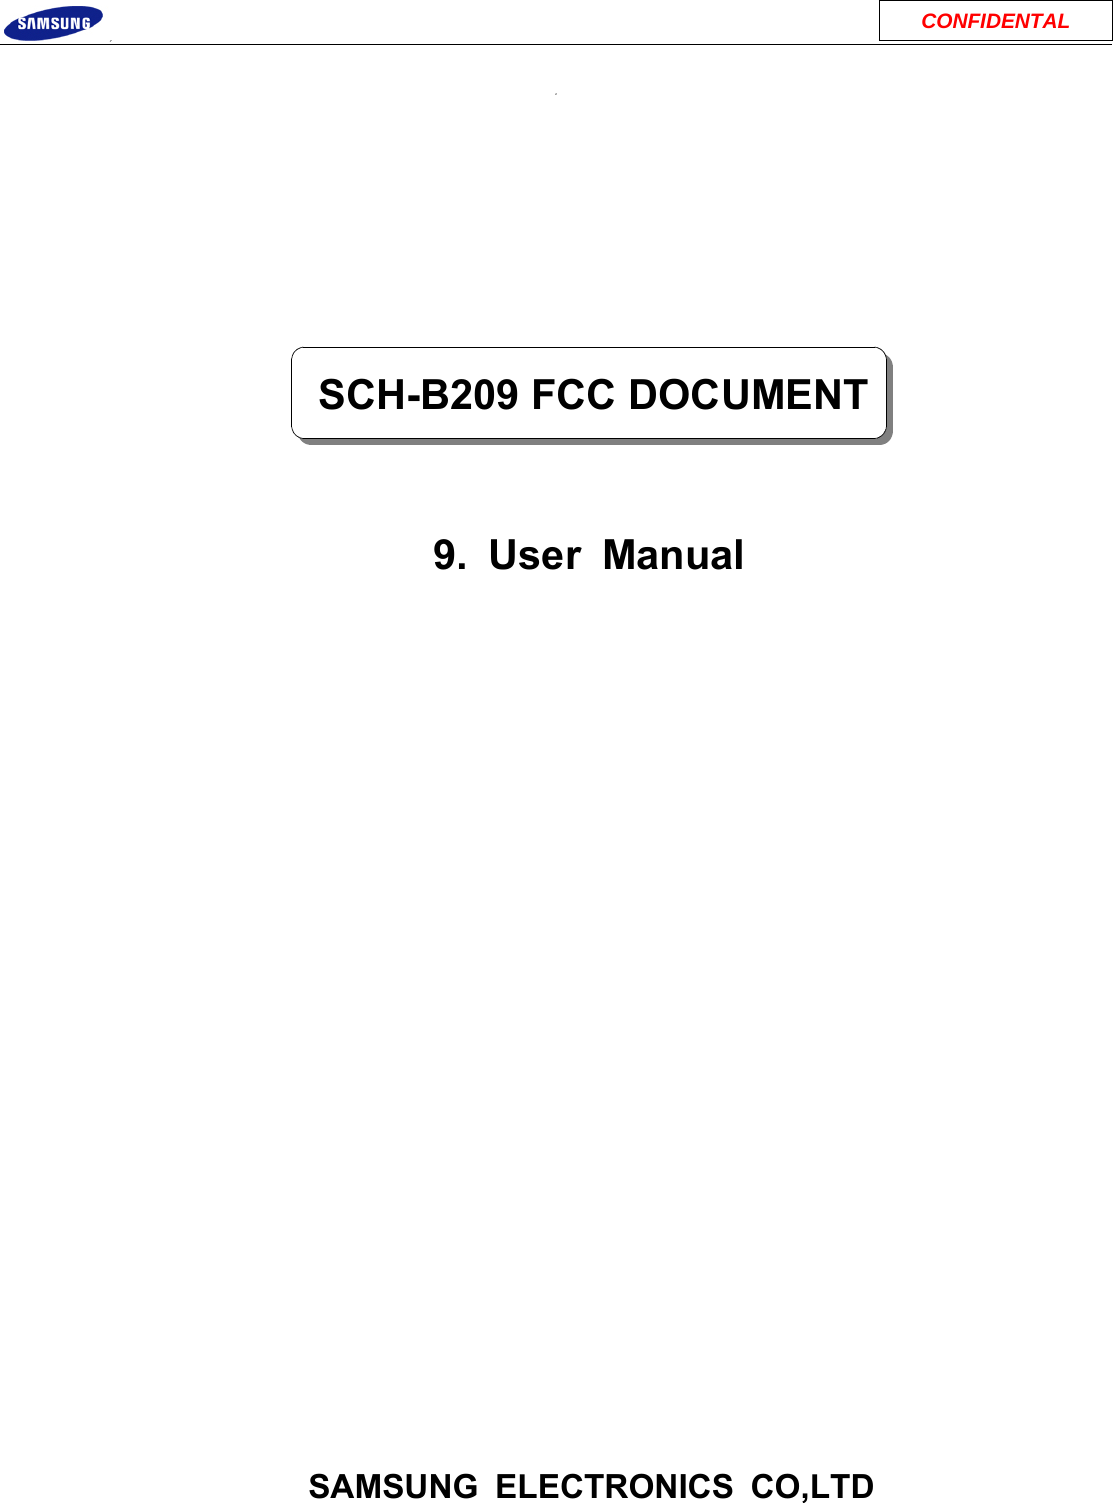 SAMSUNG ELECTRONICS CO,LTD9. User Manual SCH-B209 FCC DOCUMENTCONFIDENTAL